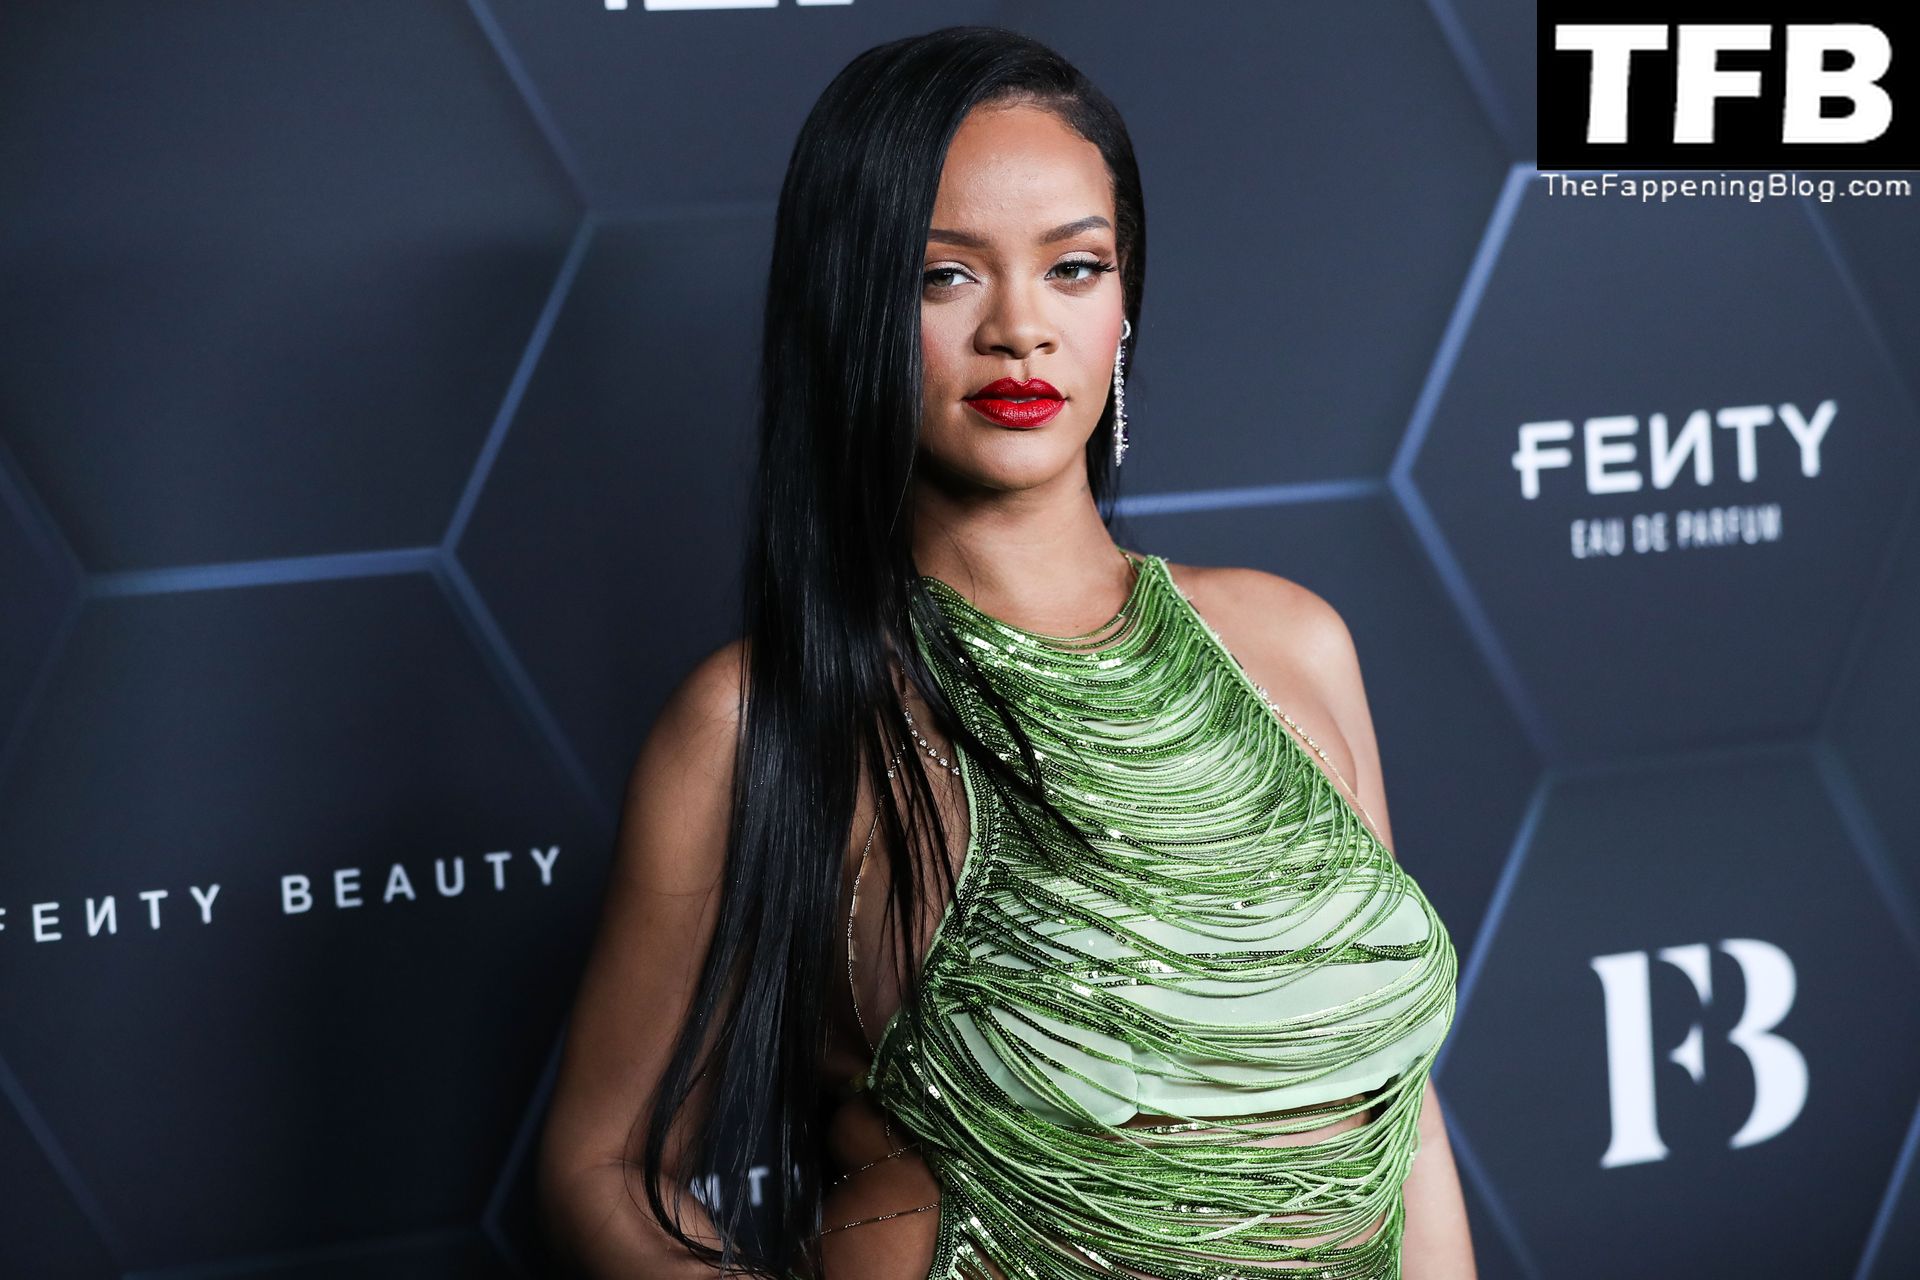 Rihanna-Sexy-The-Fappening-Blog-94.jpg